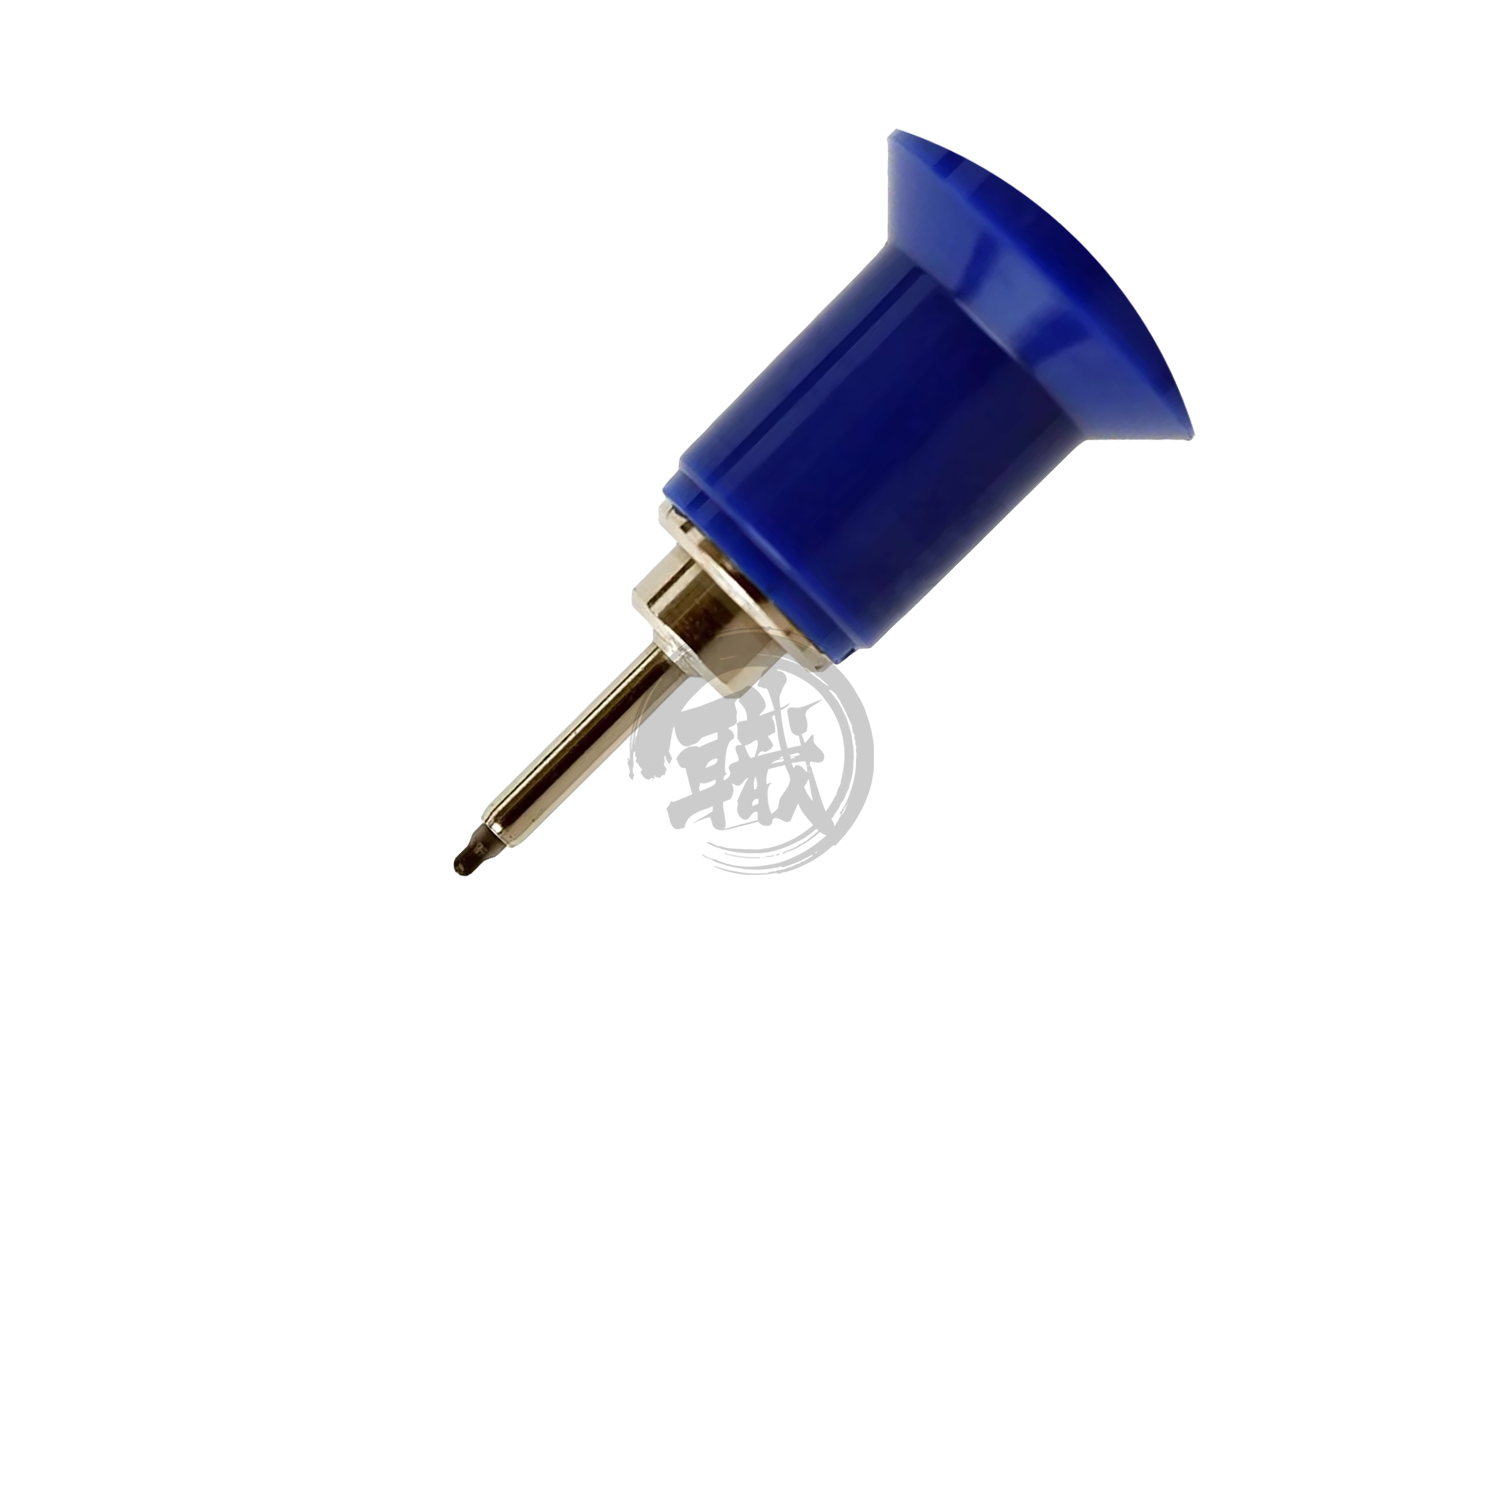 GSI Creos - [GM03R] Gundam Marker Brown [Fine Tip for Panel Lines] - ShokuninGunpla